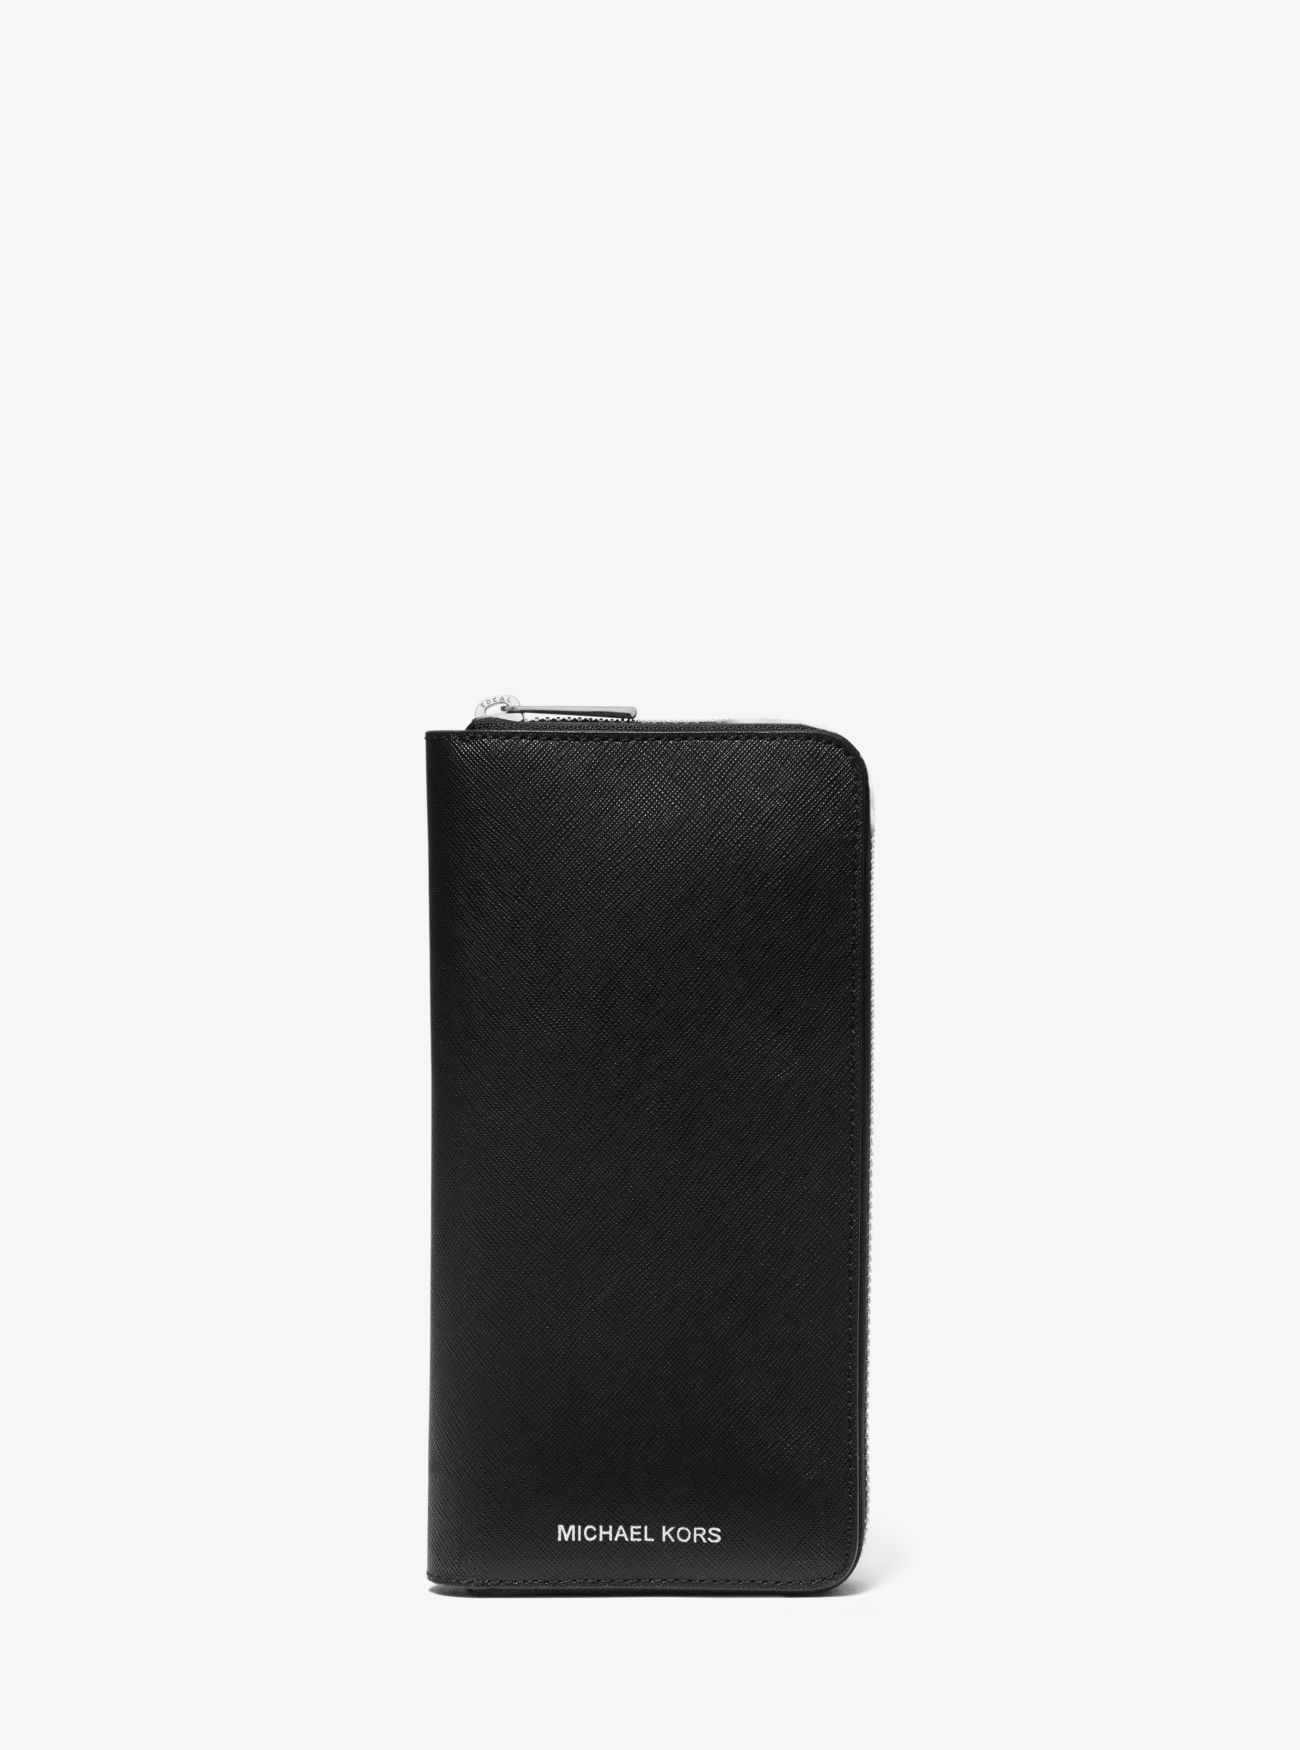 MK Henry Saffiano Leather Zip-Around Wallet - Black - Michael Kors